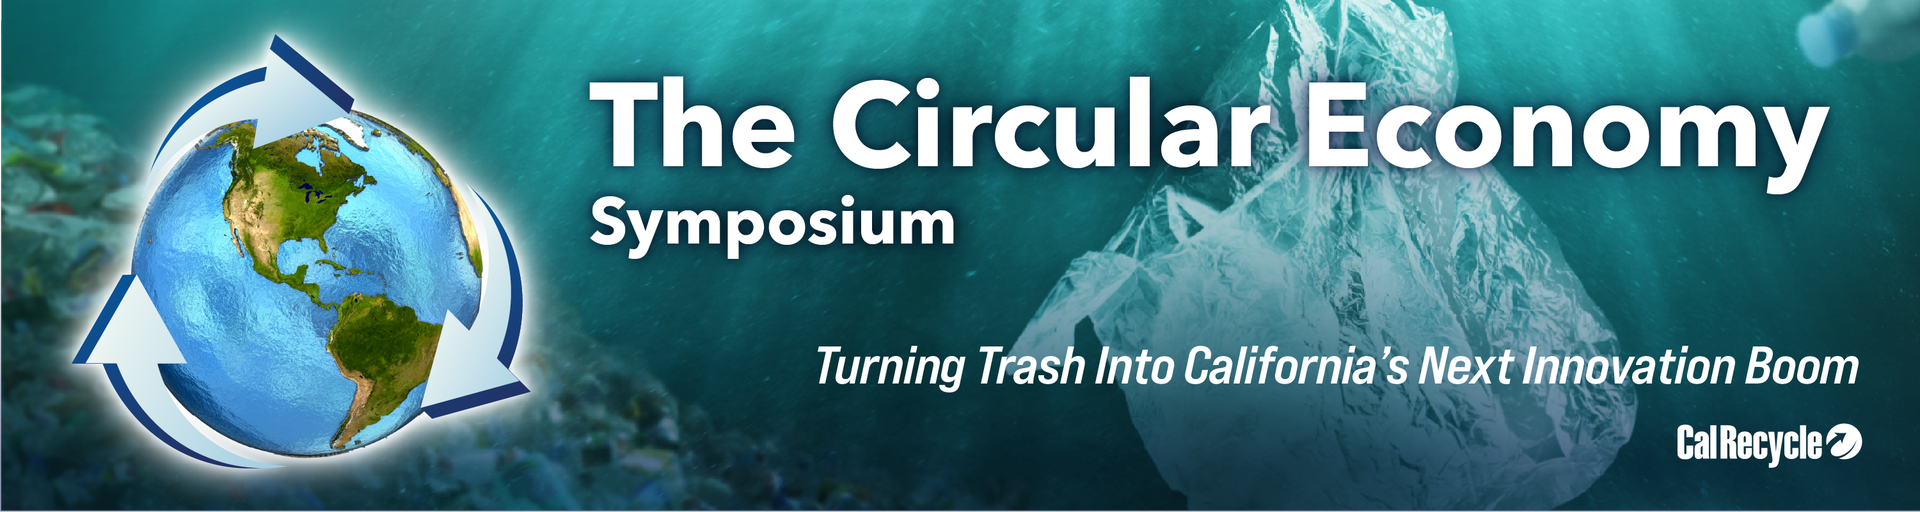 The circular economy symposium banner